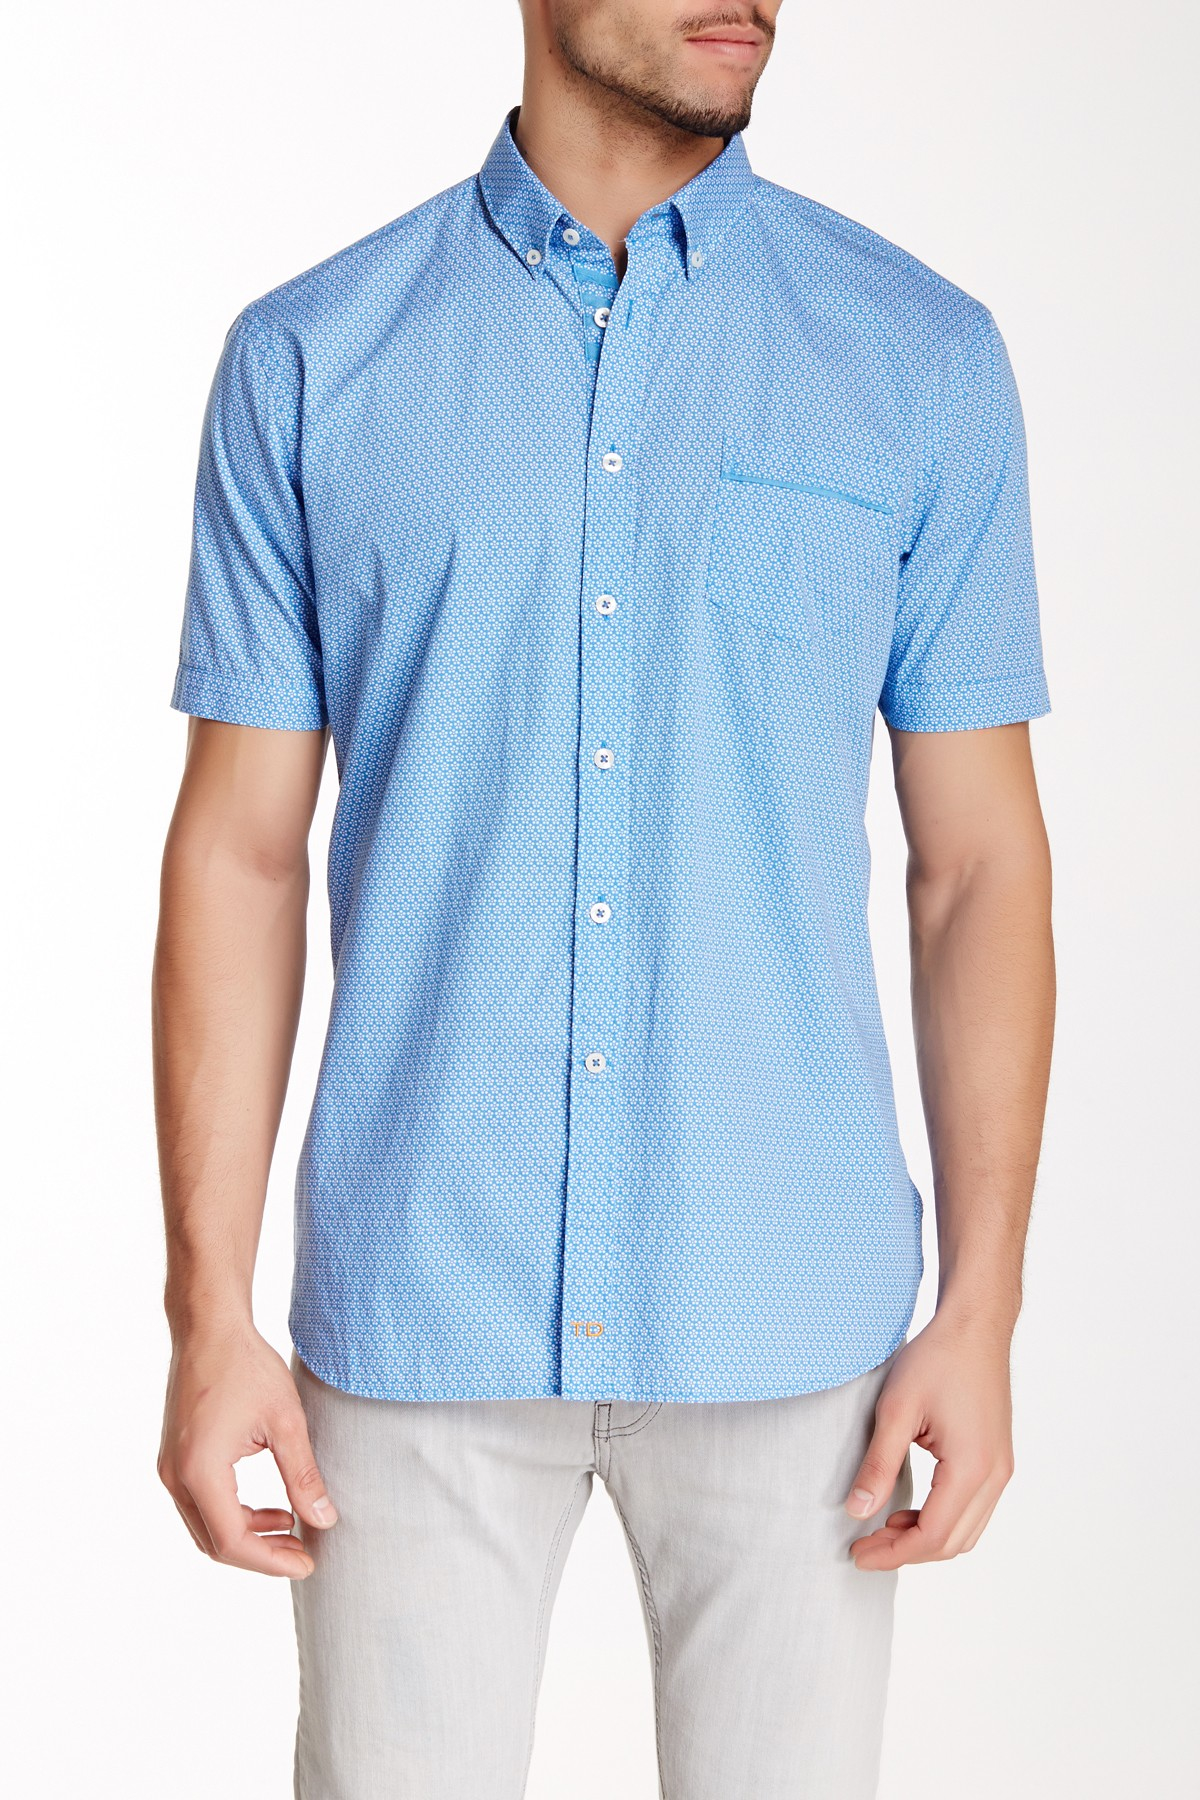 Lyst - Thomas Dean Button-down Collar Short Sleeve Shirt in Blue for Men